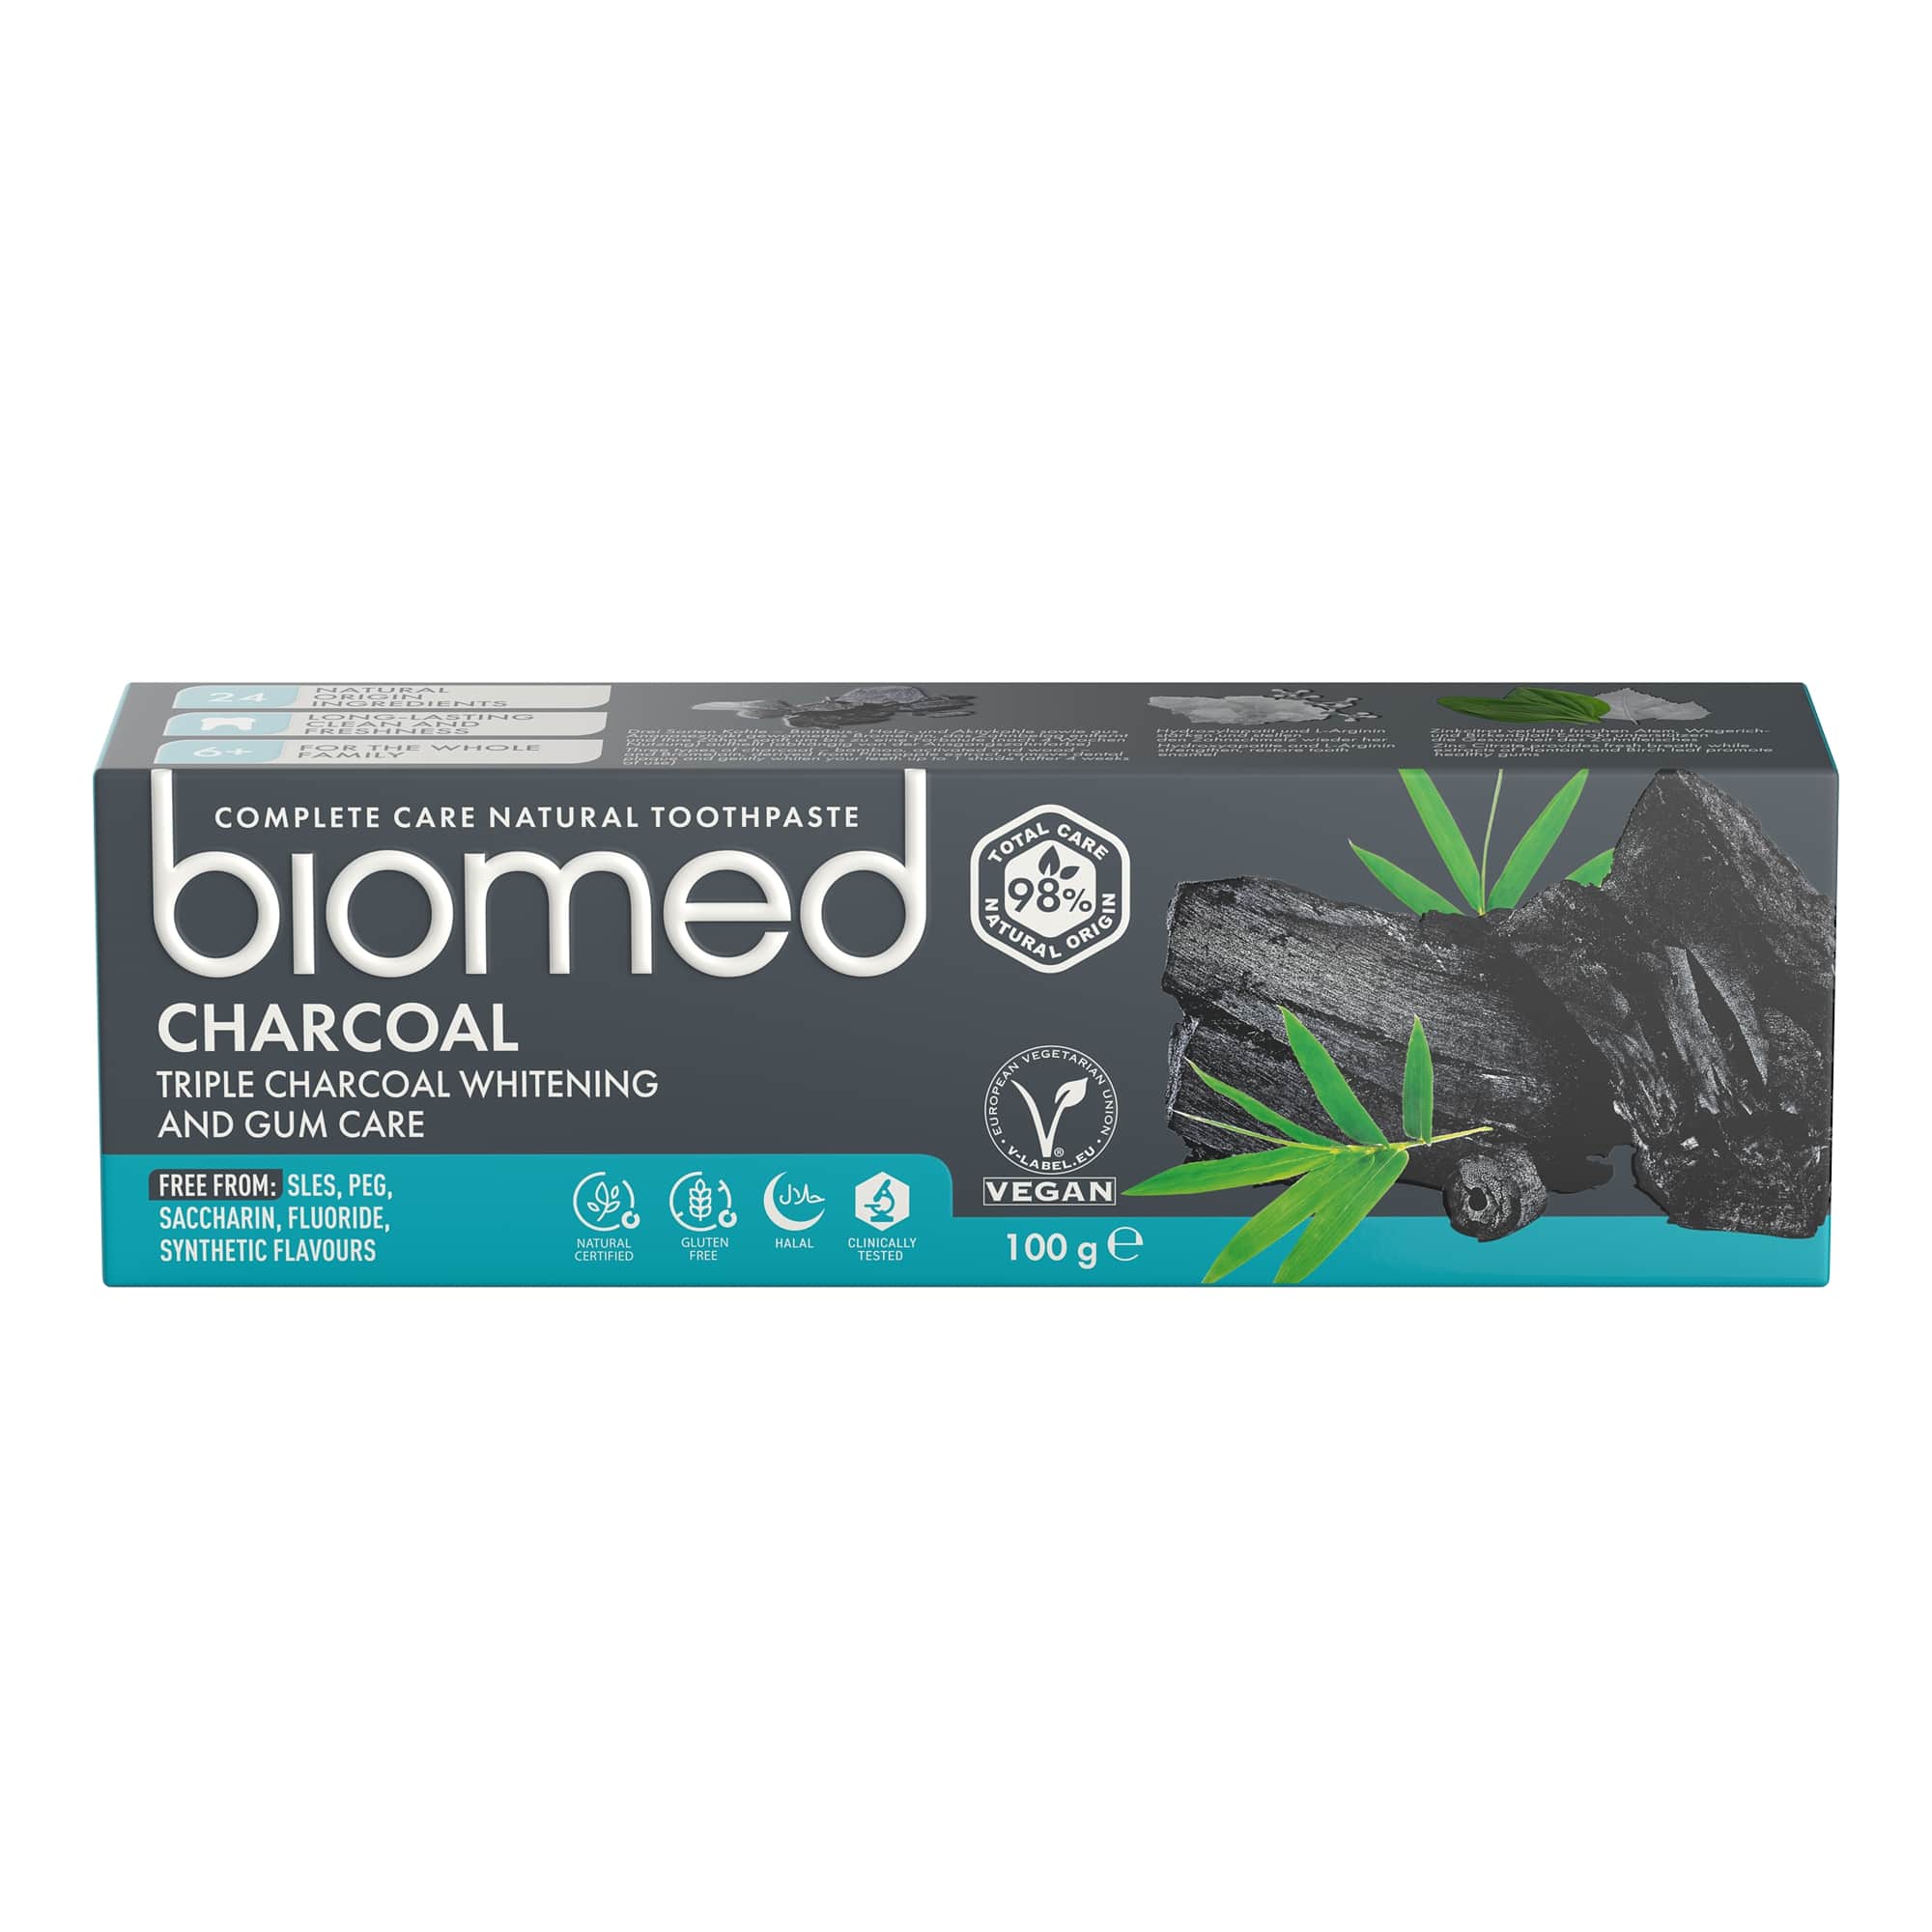 Biomed Charcoal natürliche Aktivkohlenzahnpasta